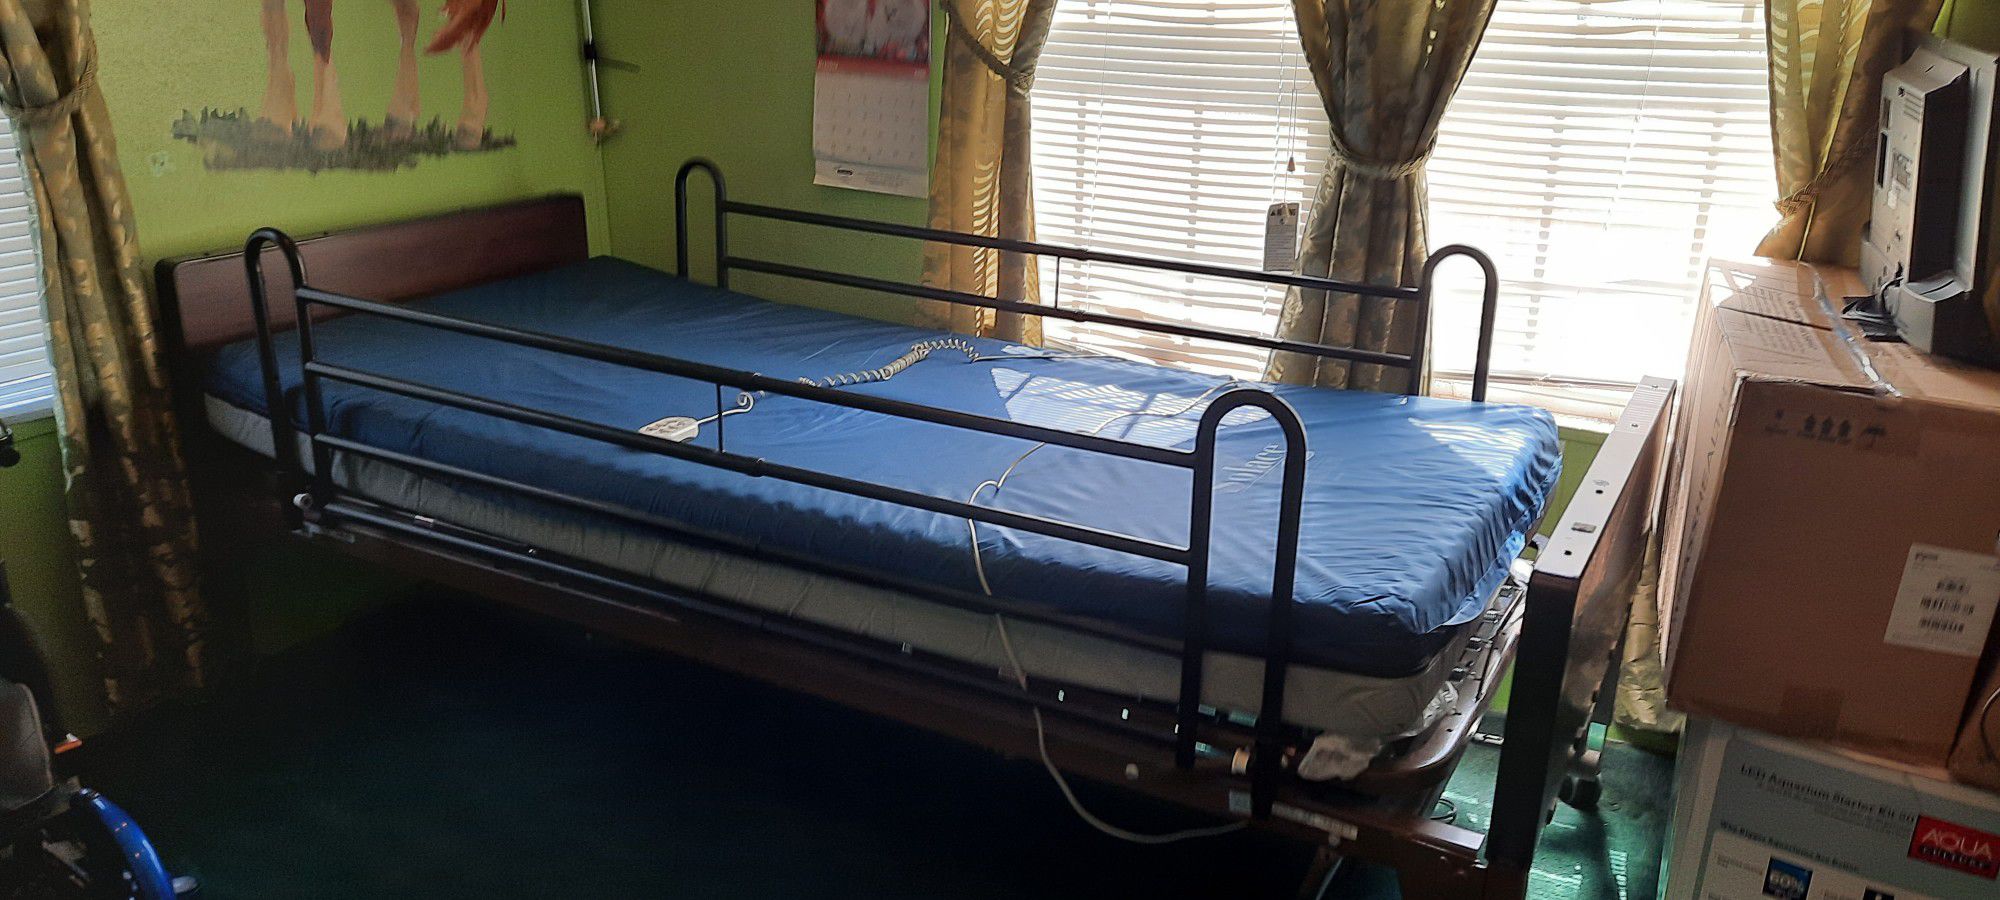 Hospital Bed